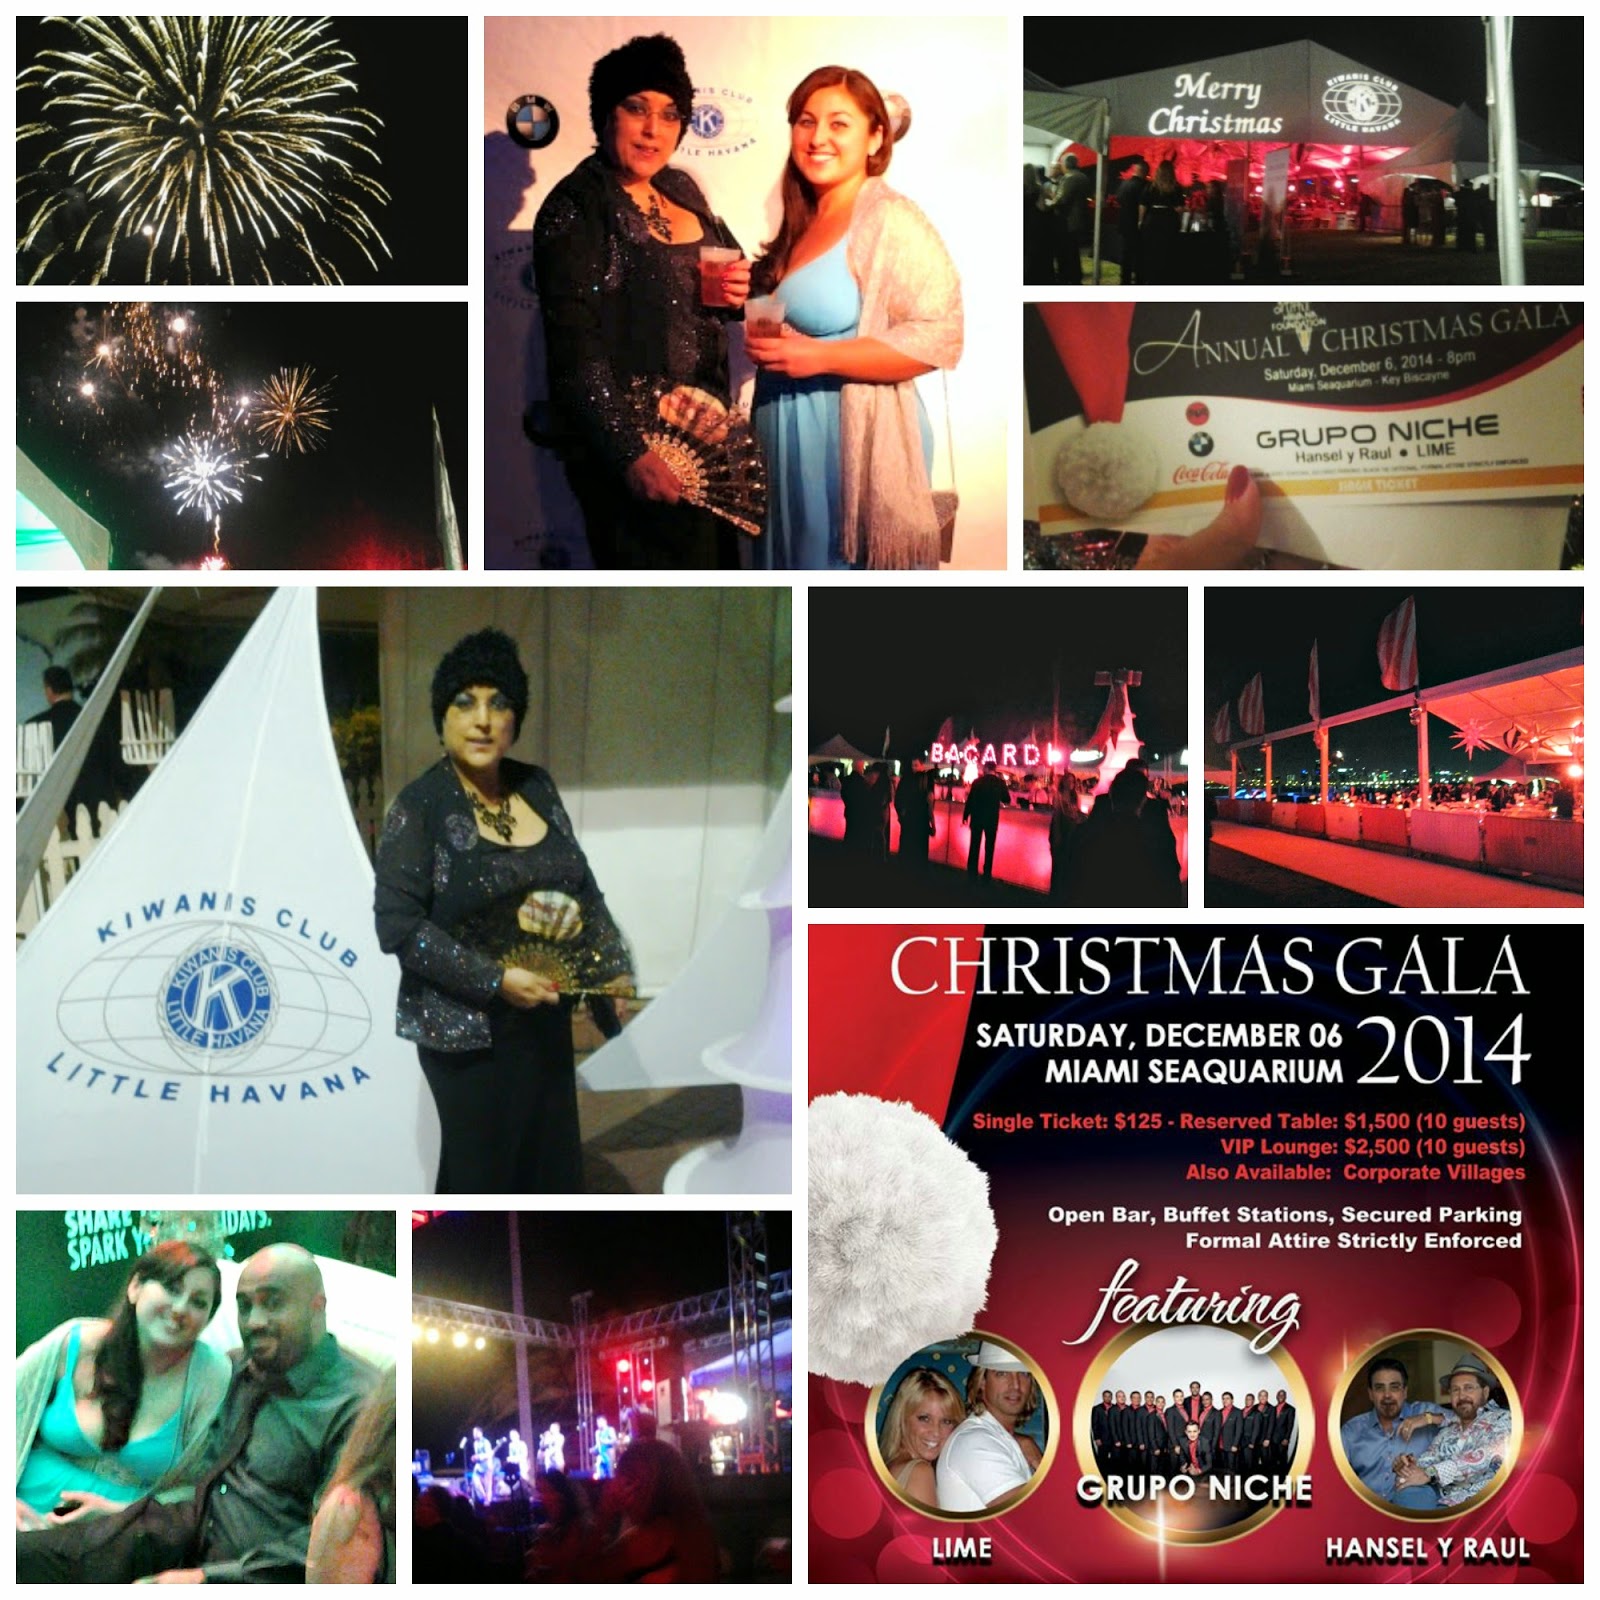 Little Havana Kiwanis Christmas Gala Miami Seaquarium Lime,Grupo Niche & Hansel y Raul.